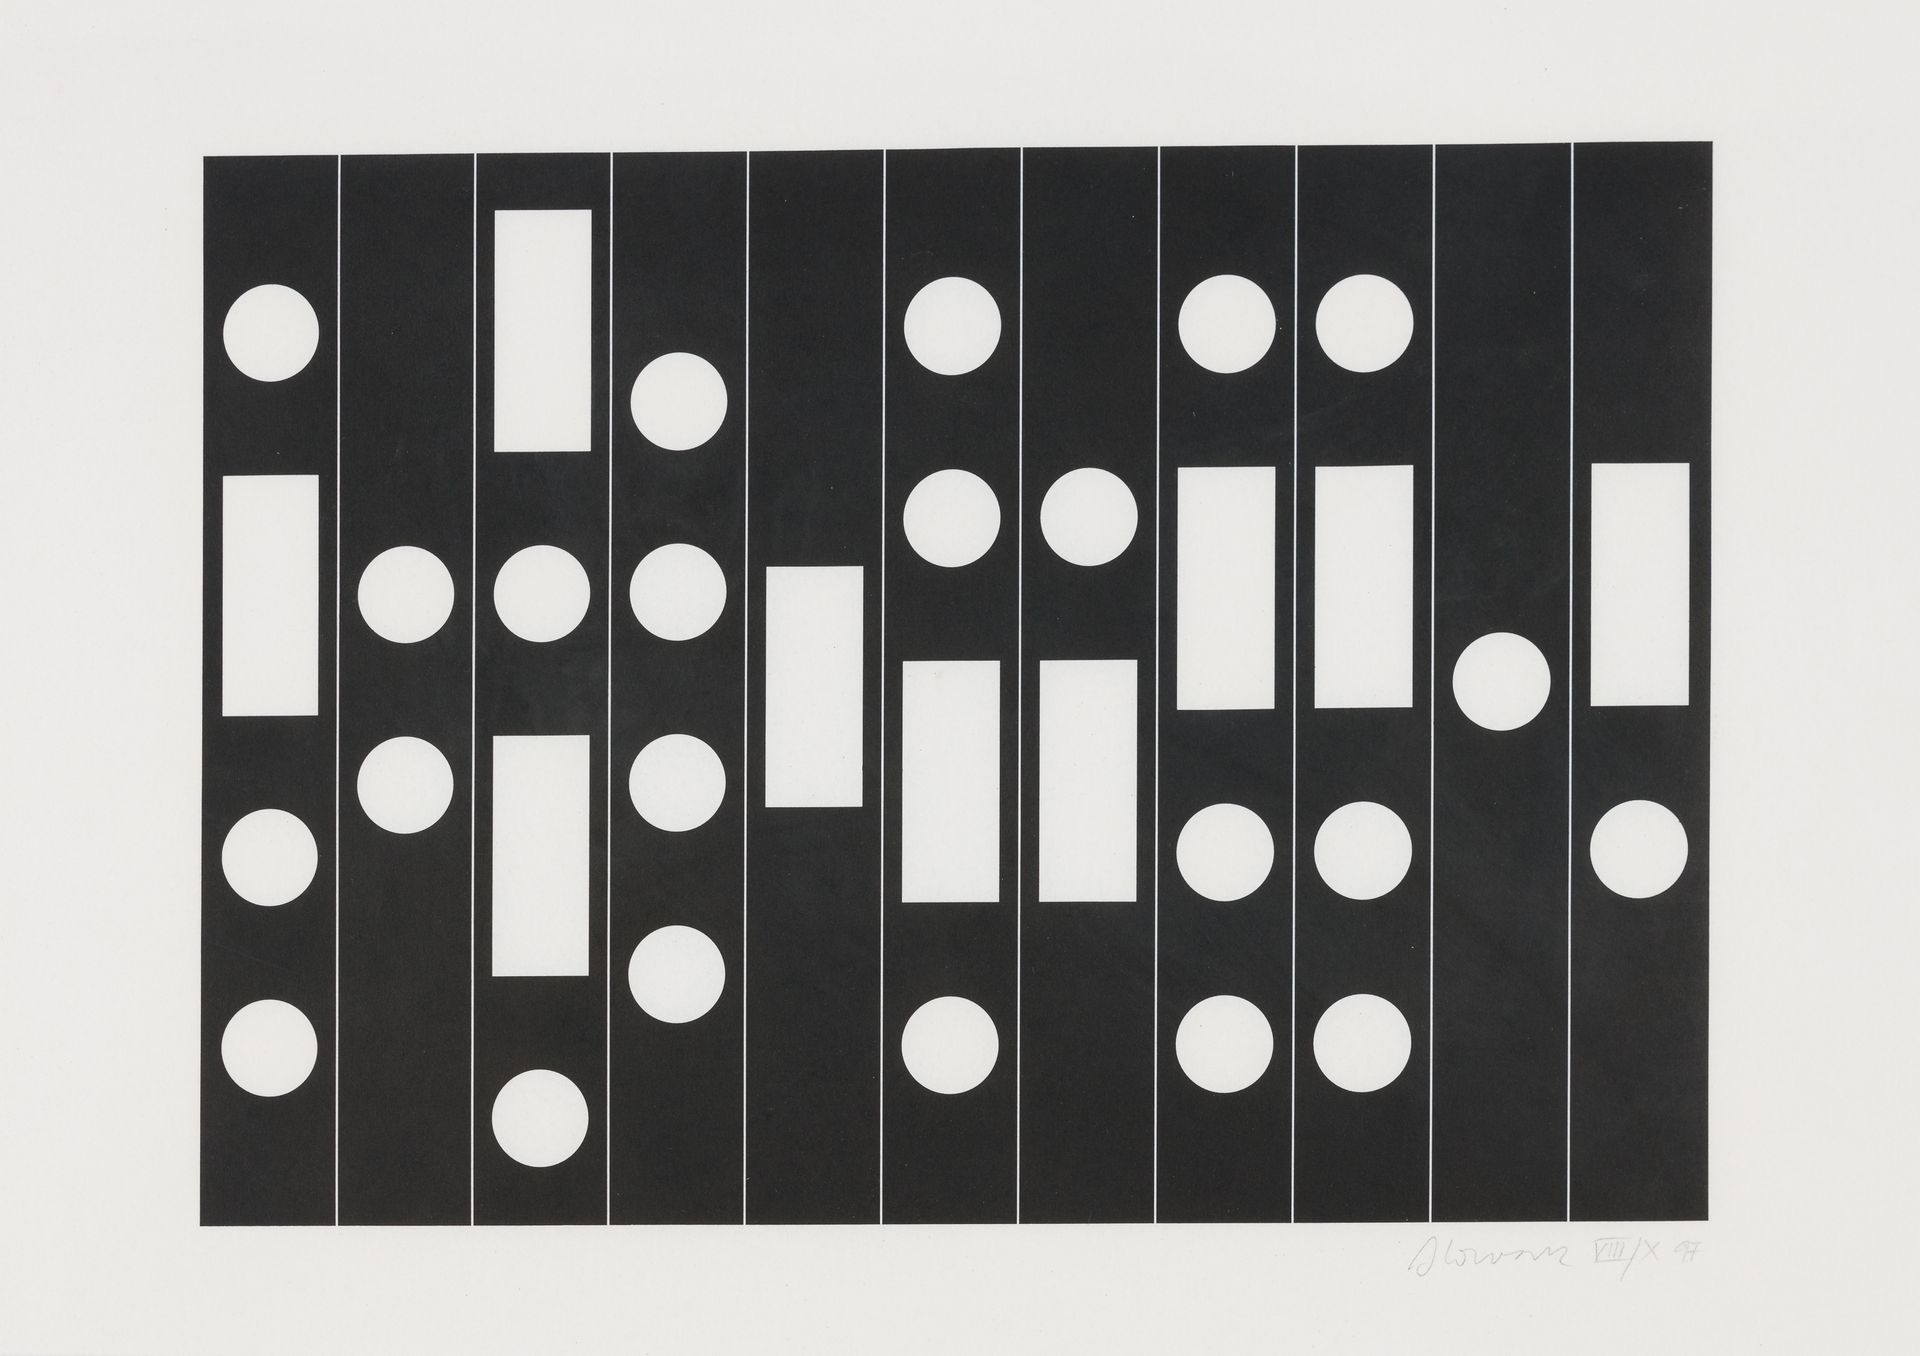 Kowanz, Brigitte Light Traps (Morse Code), 1997
Monochrome print on vellum paper&hellip;